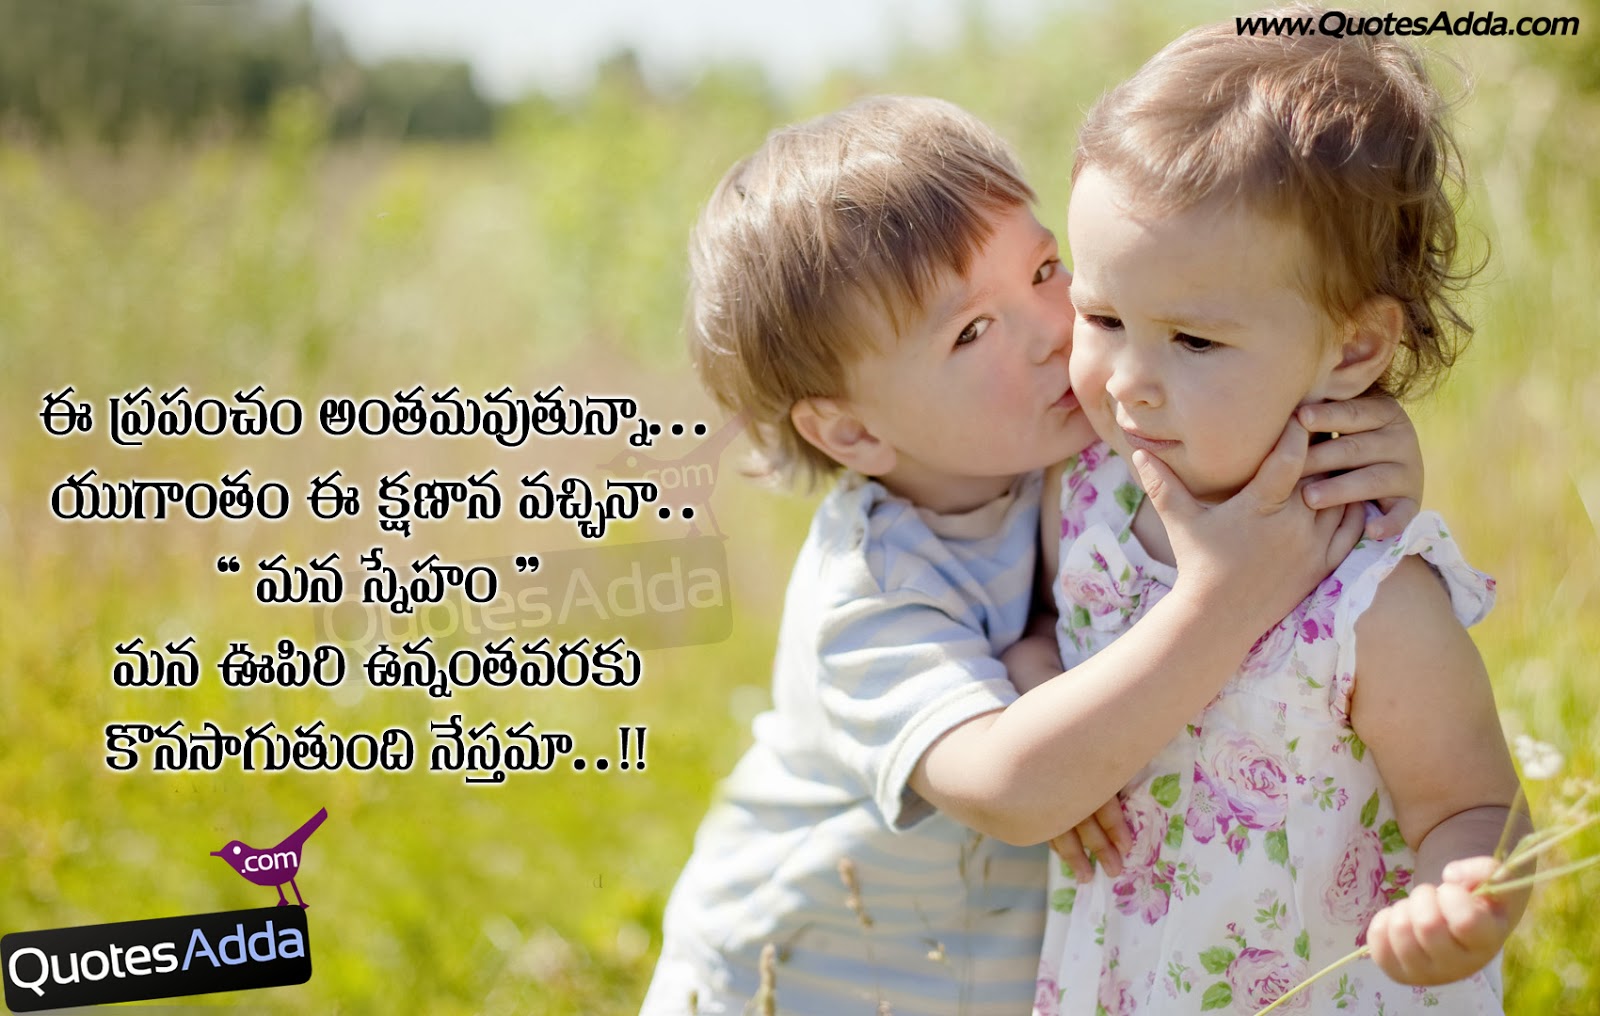 1178858234 Telugu Friendship Quotes with Images QuotesAdda com